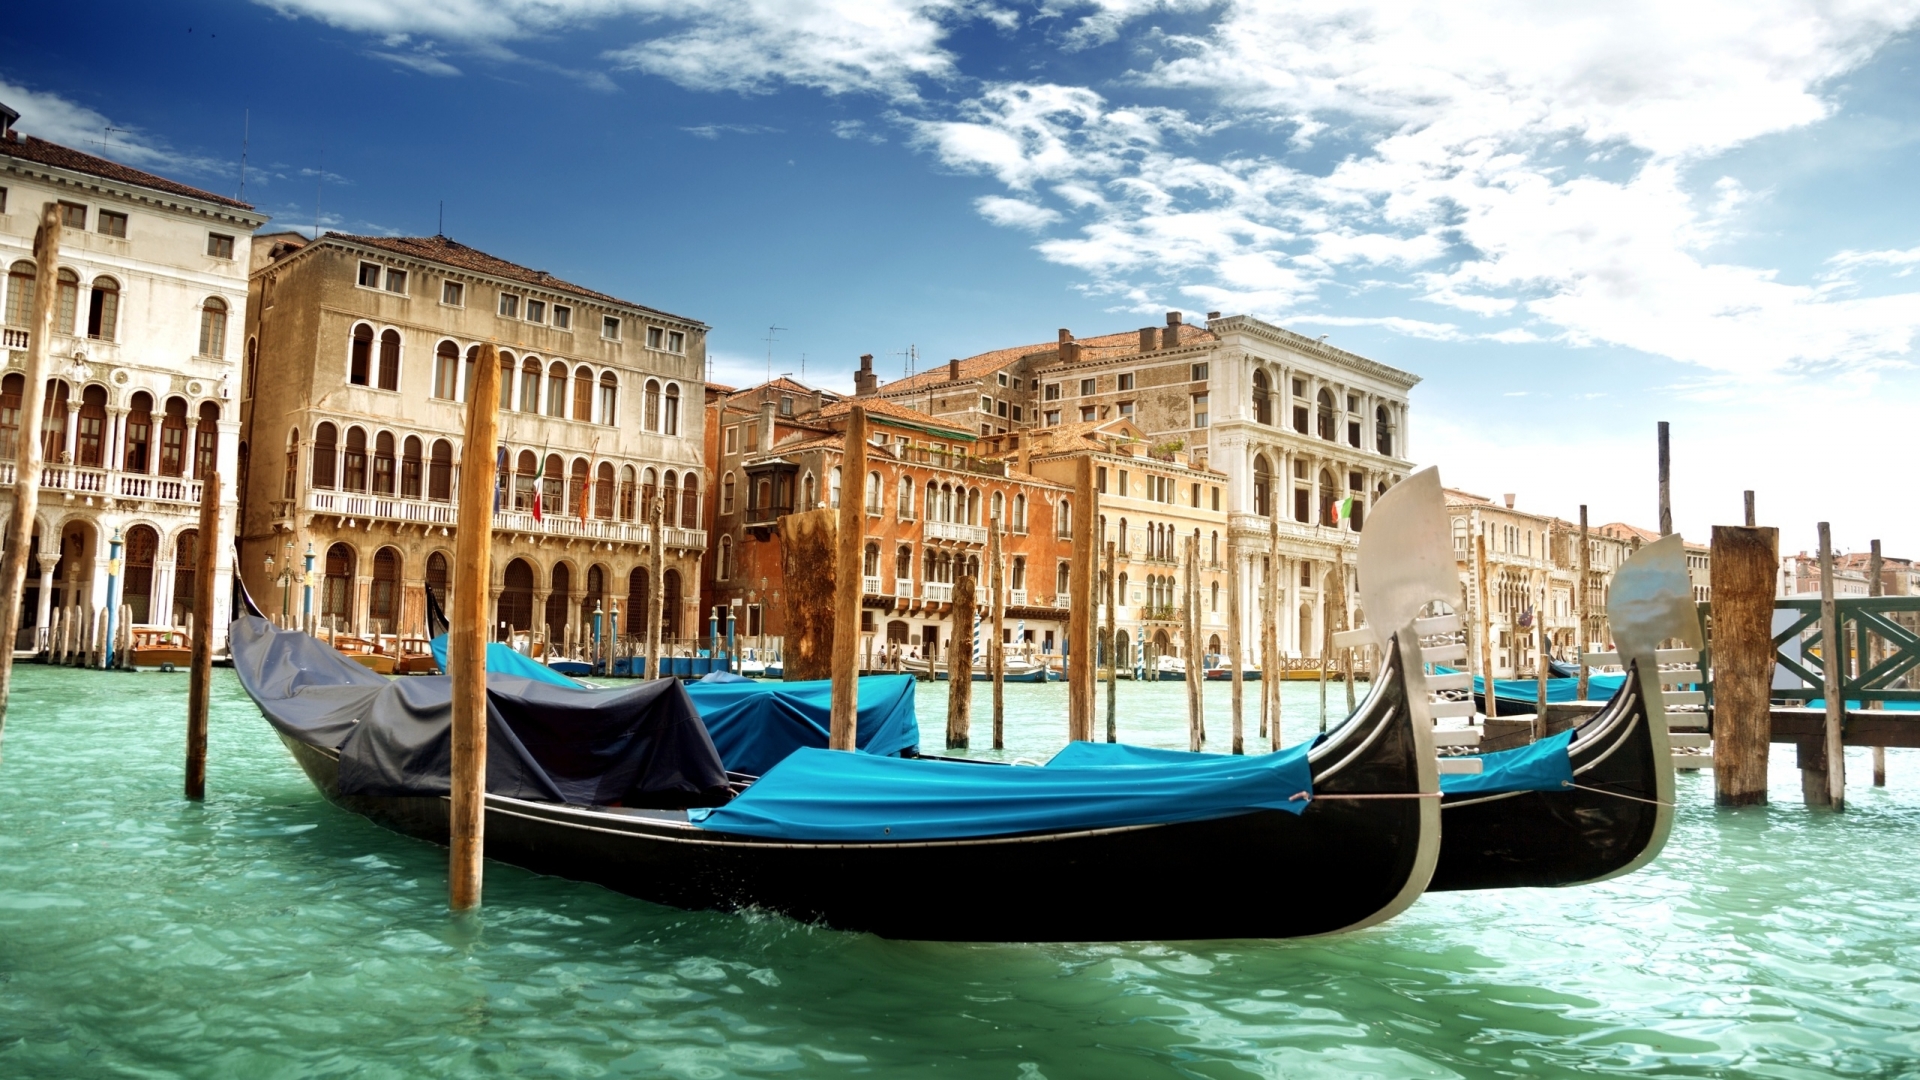 Venice Gondola Sunset HD Wallpaper Background Image